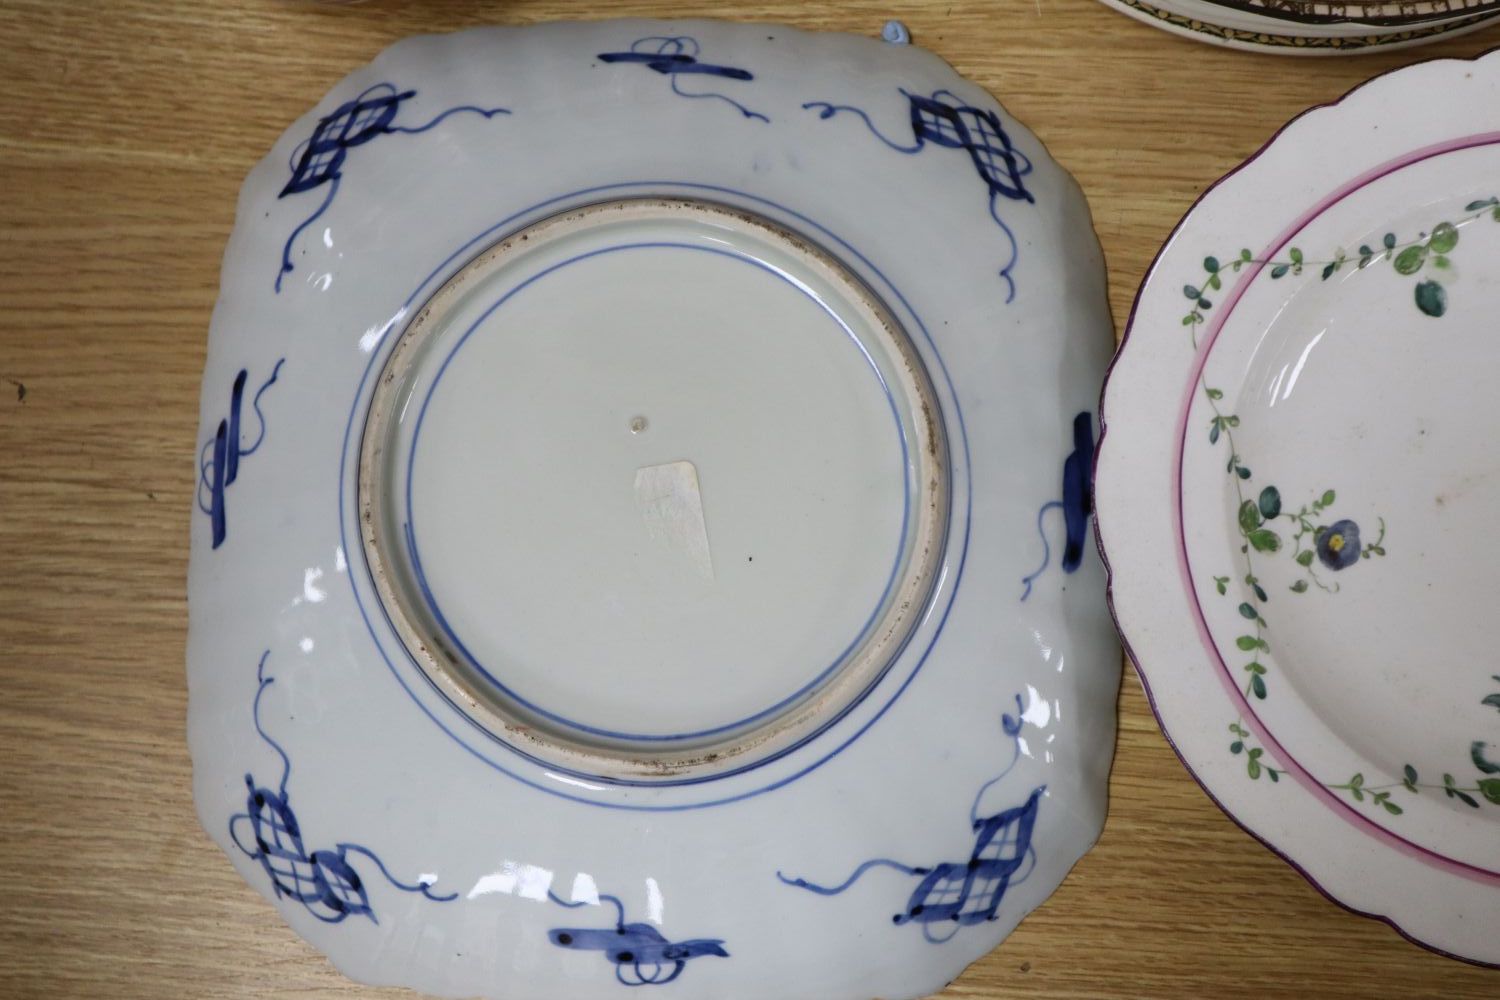 A Meissen plate, an Imari dish, Doulton plates, a Charlotte Rhead vase etc.